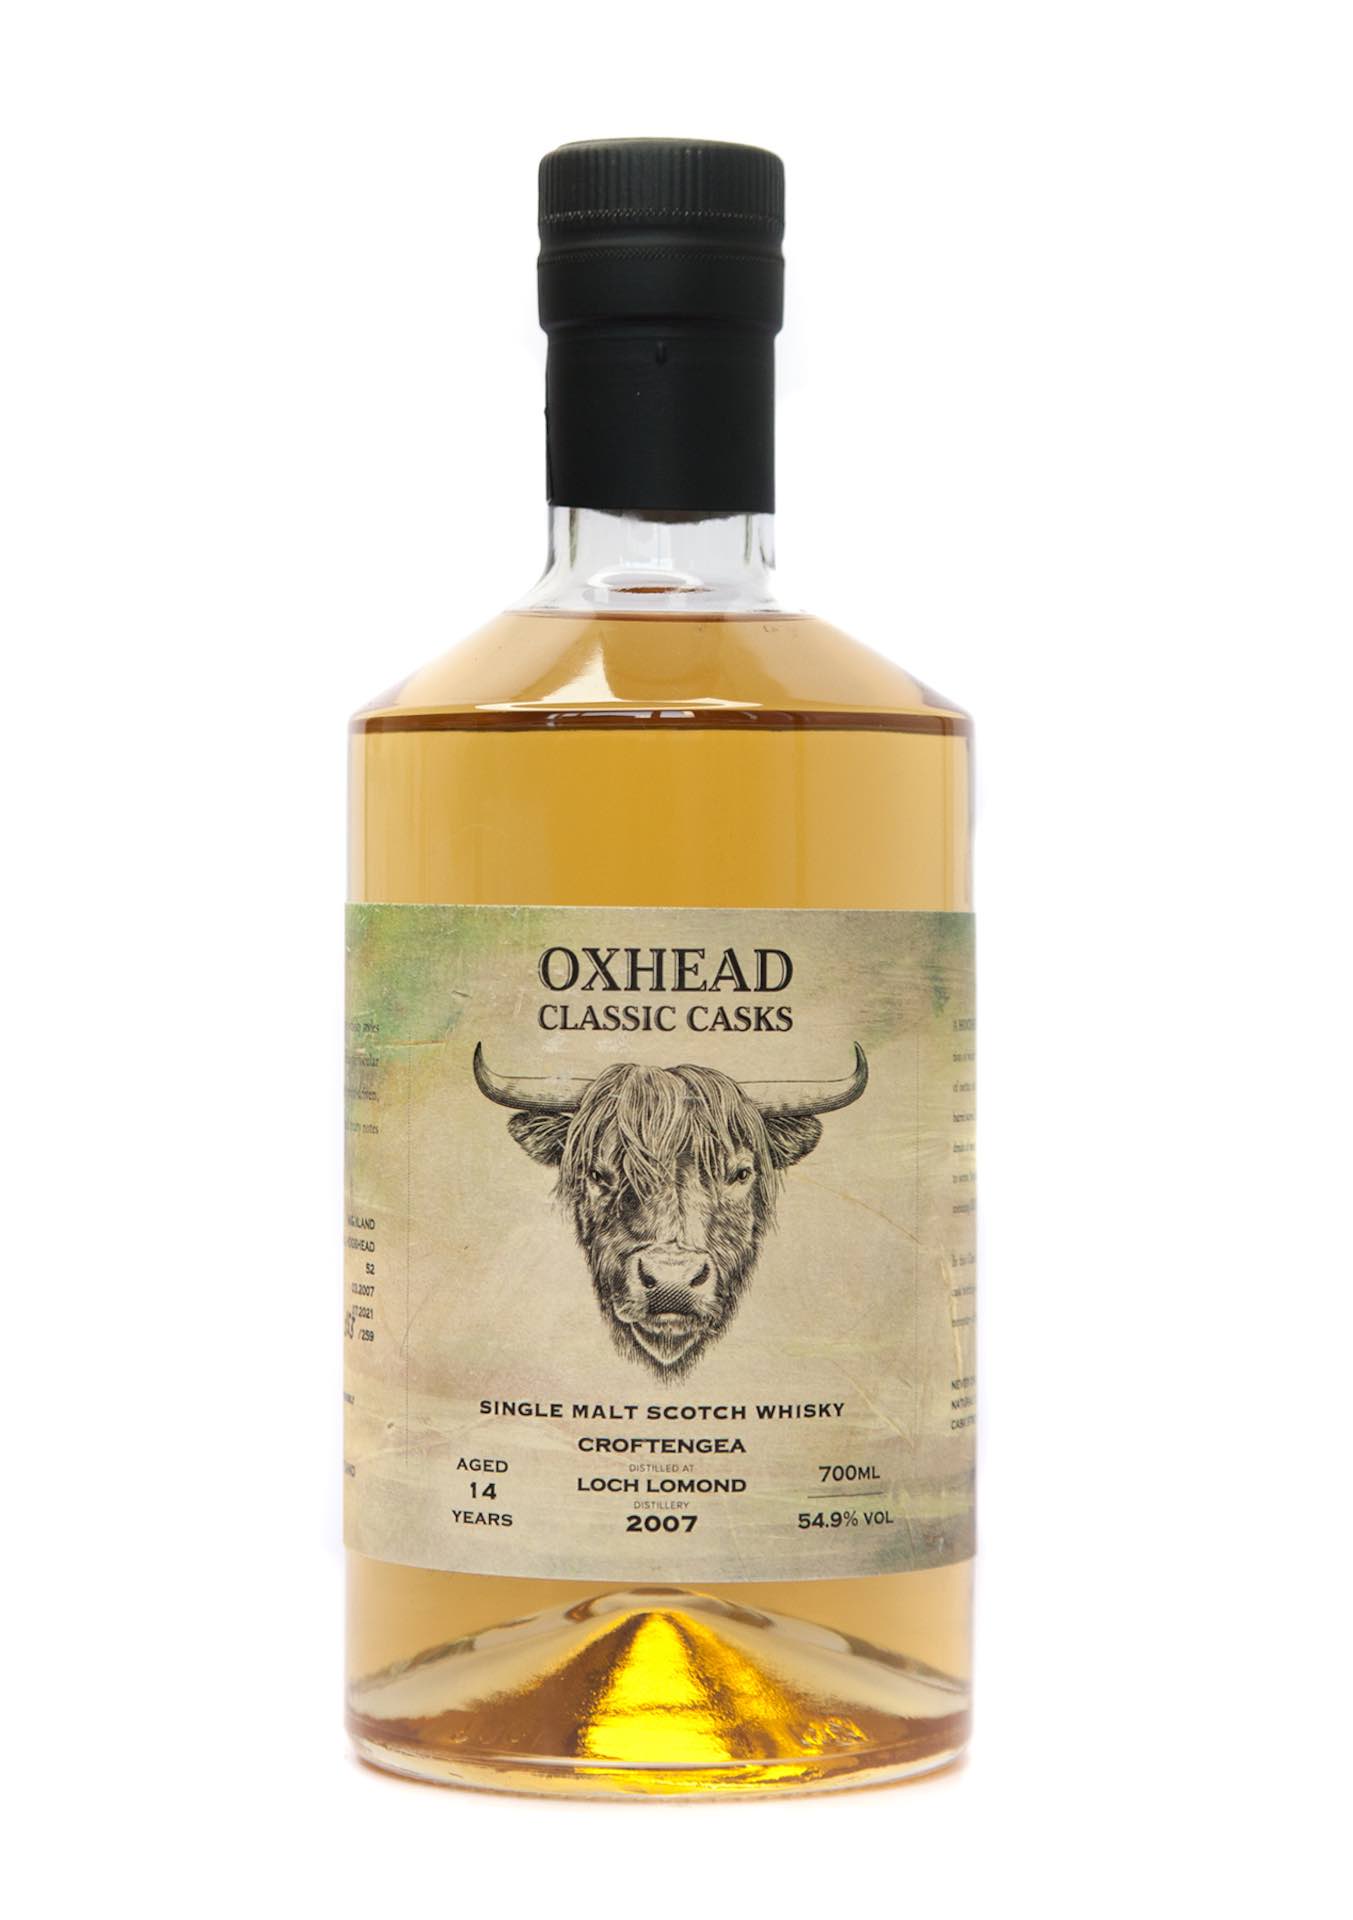 Oxhead Classic Casks: Croftengea 14 Year Old Scotch Whisky